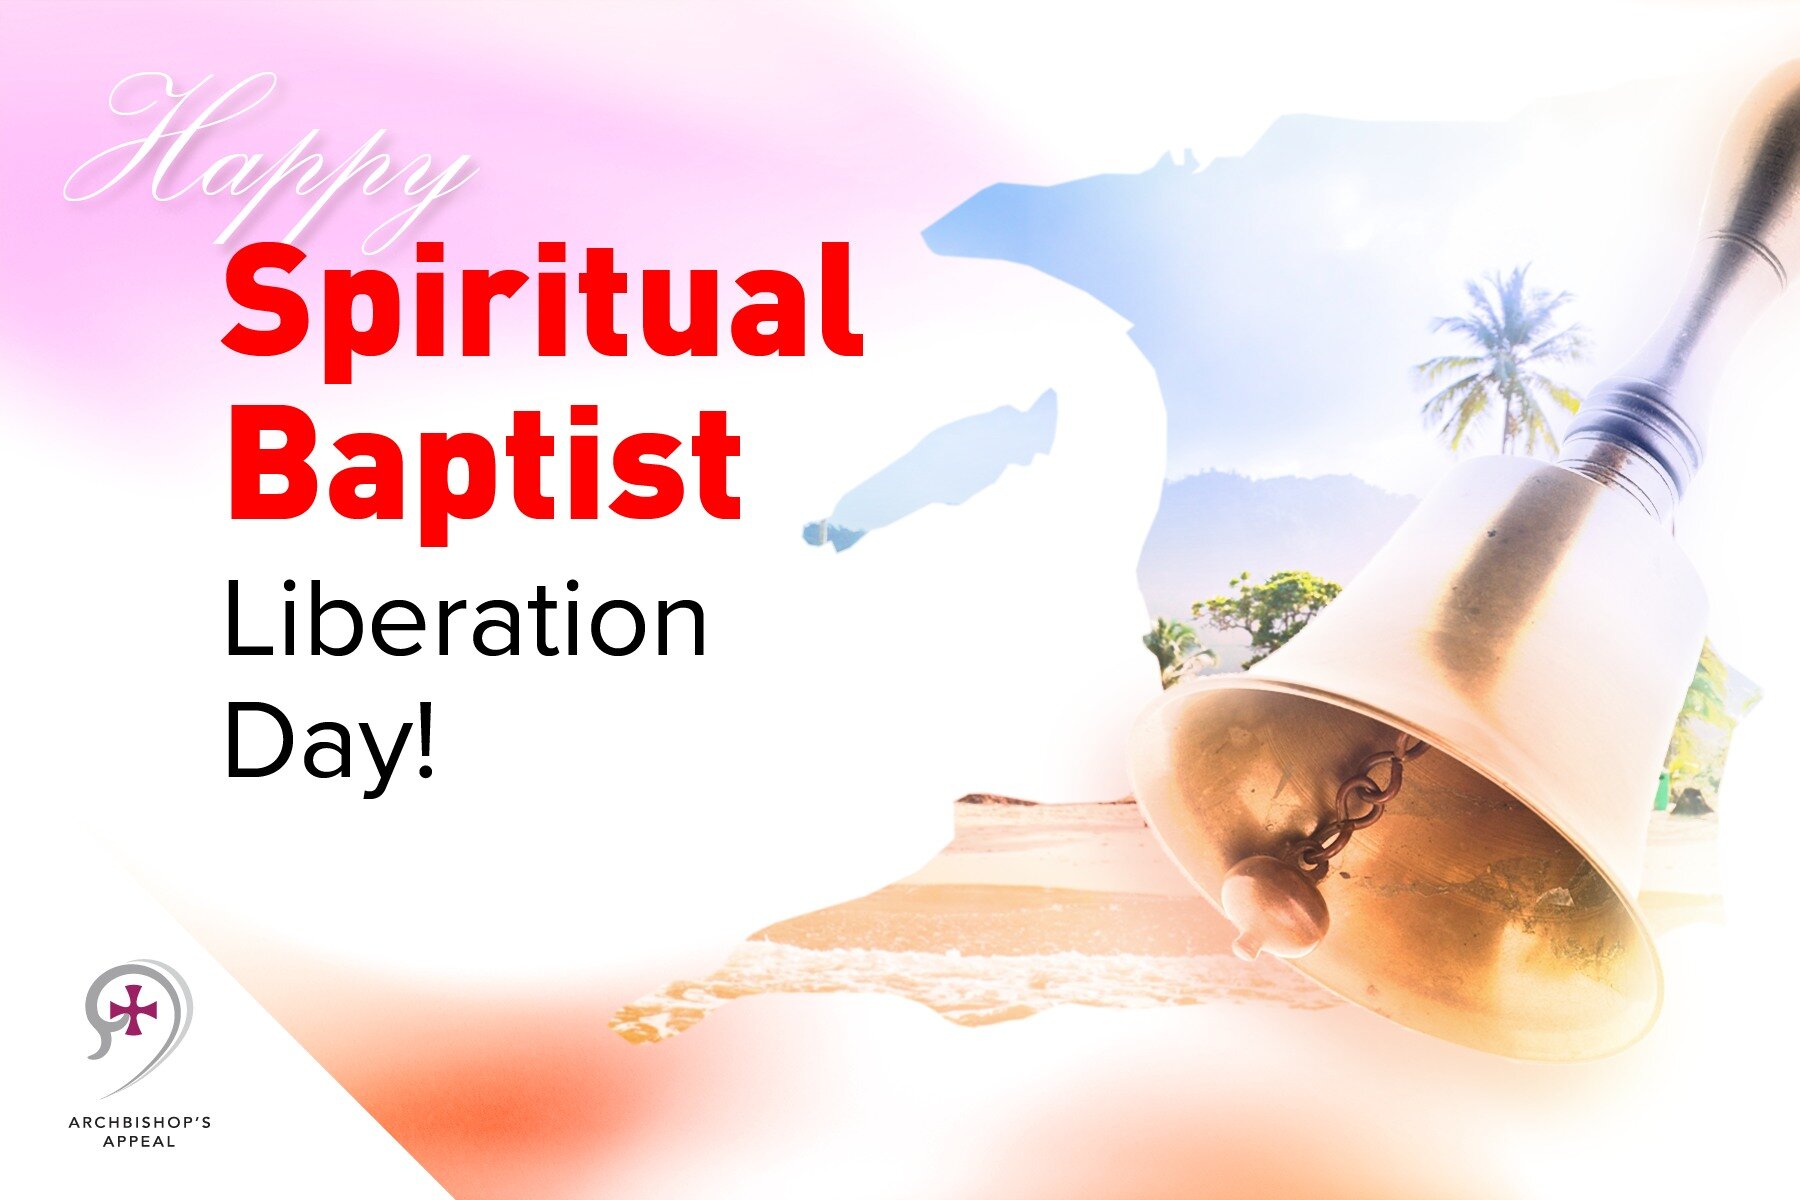 Happy Spiritual Baptist Liberation day from Archbishop's Appeal!

 #spiritualbaptistday #trinidadandtobago